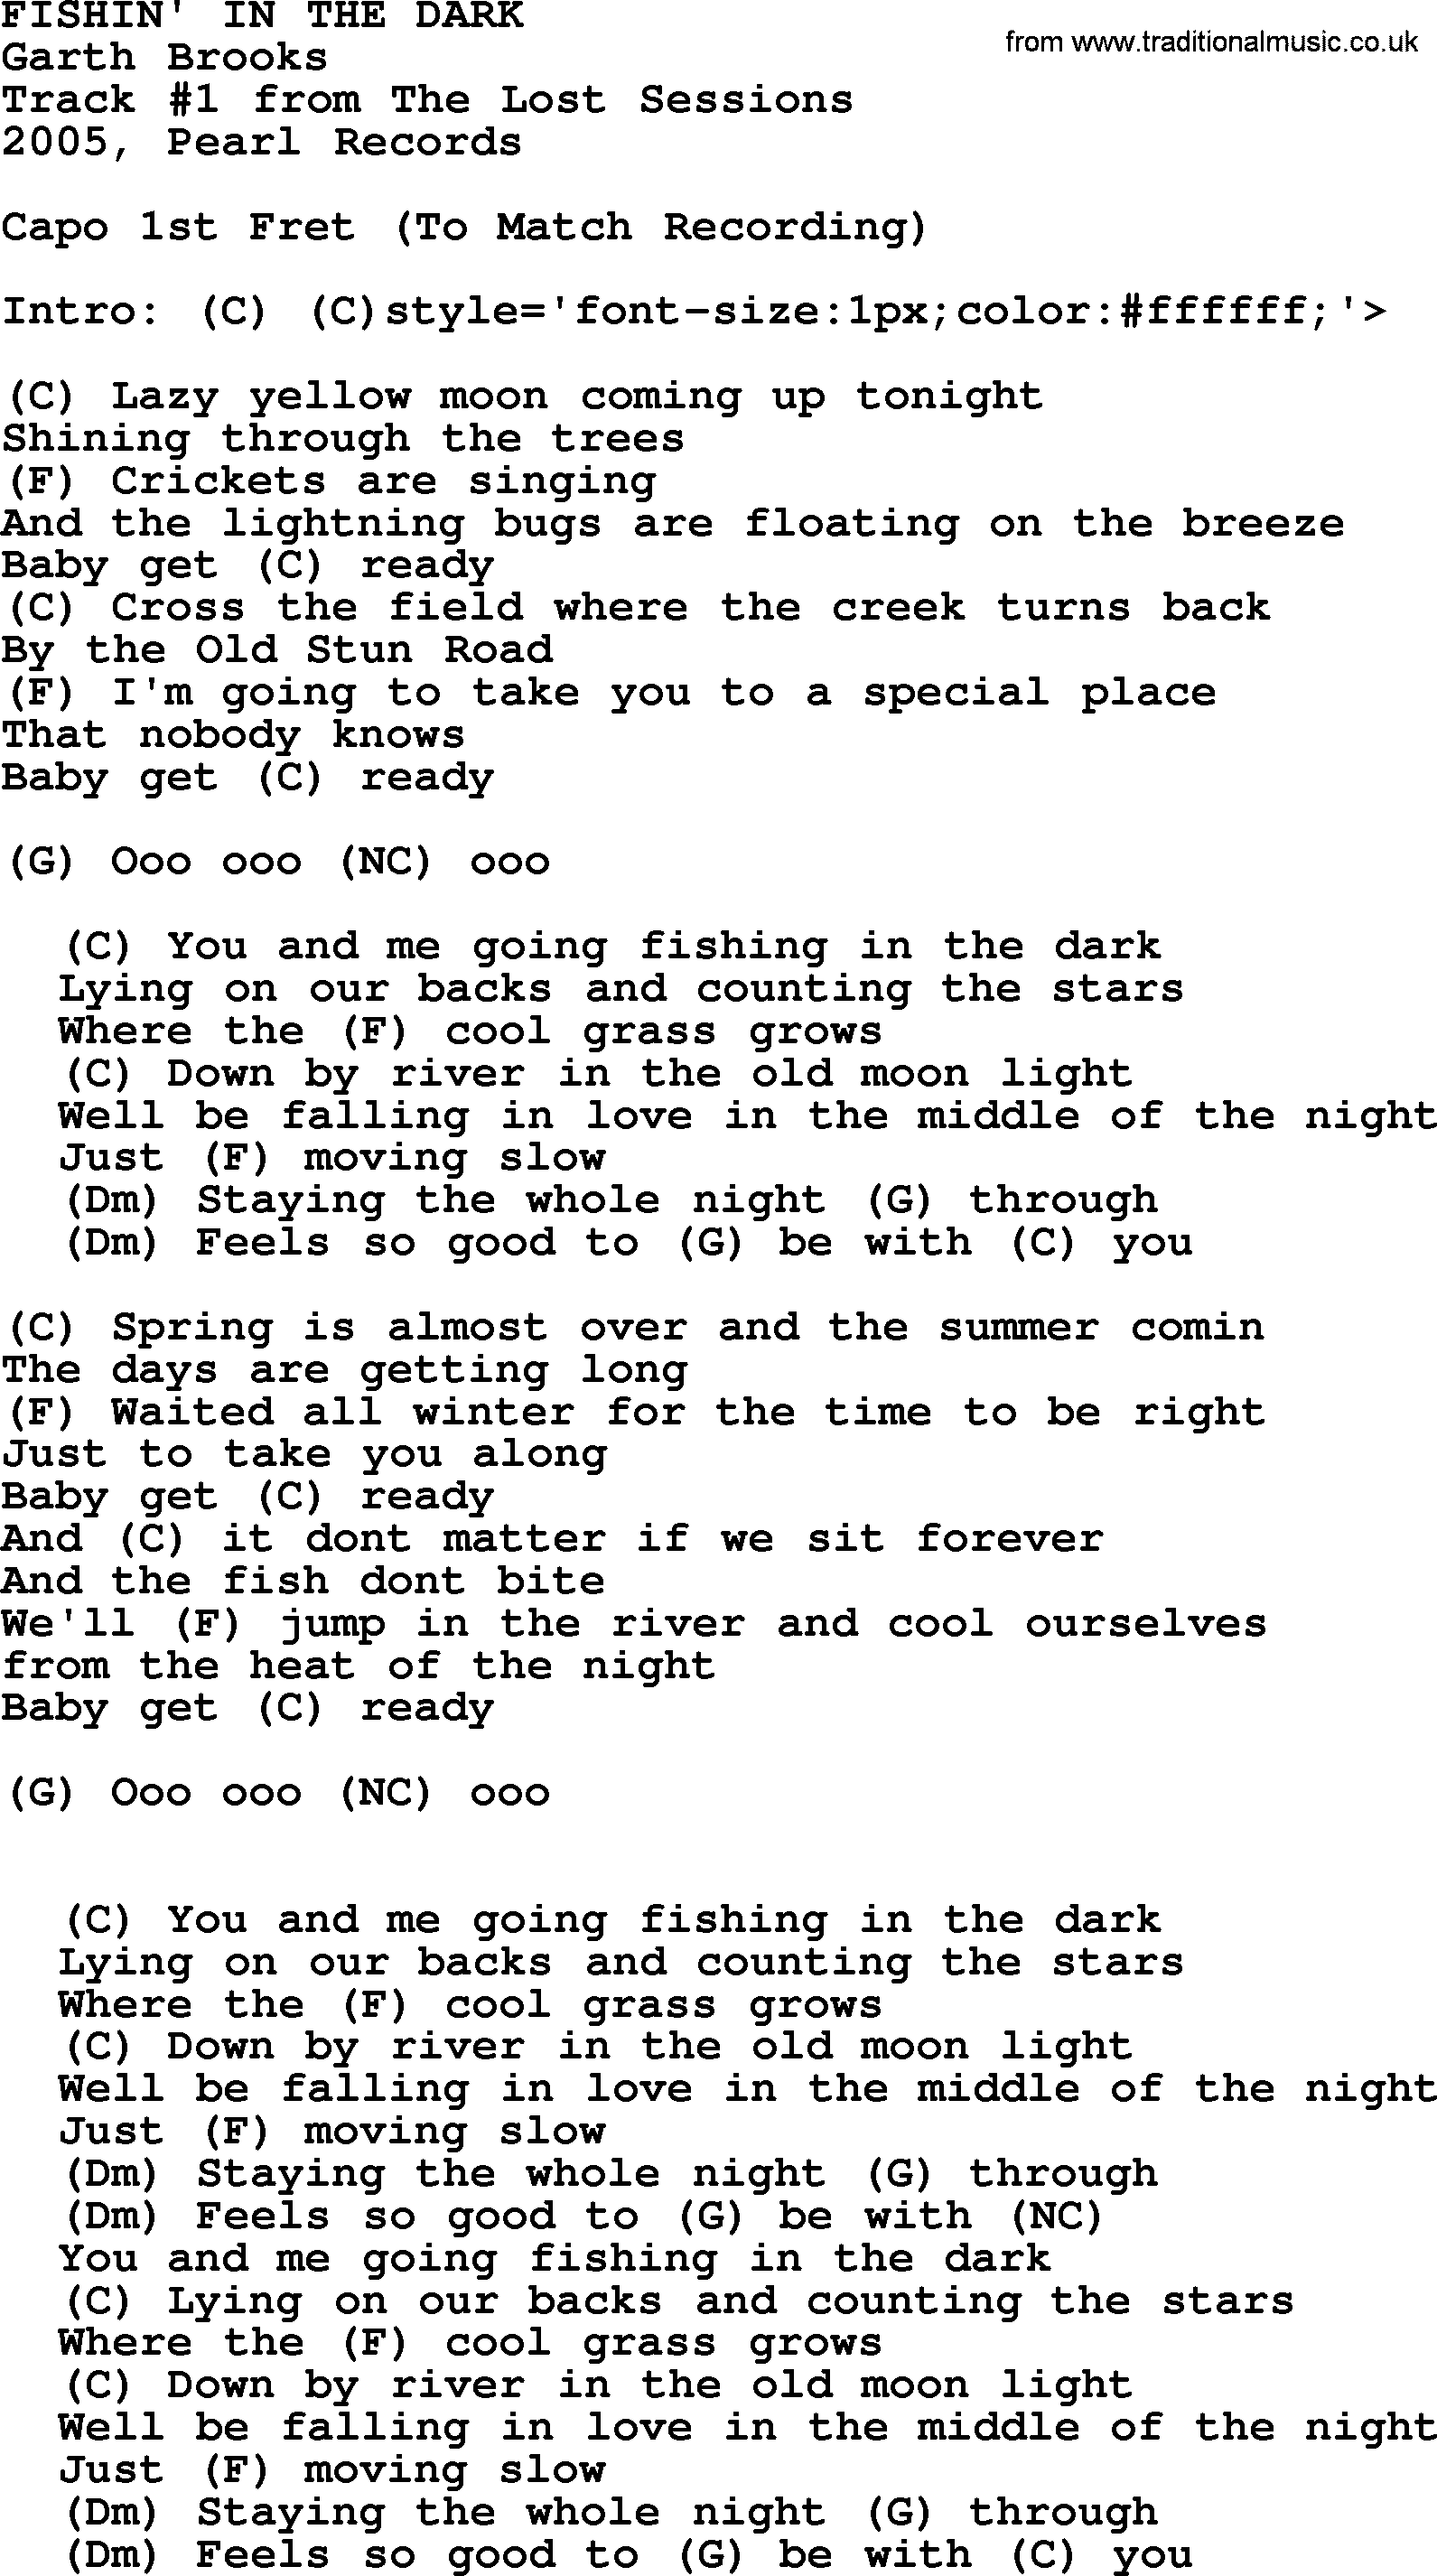 Garth Brooks song: Fishin' In The Dark, lyrics and chords